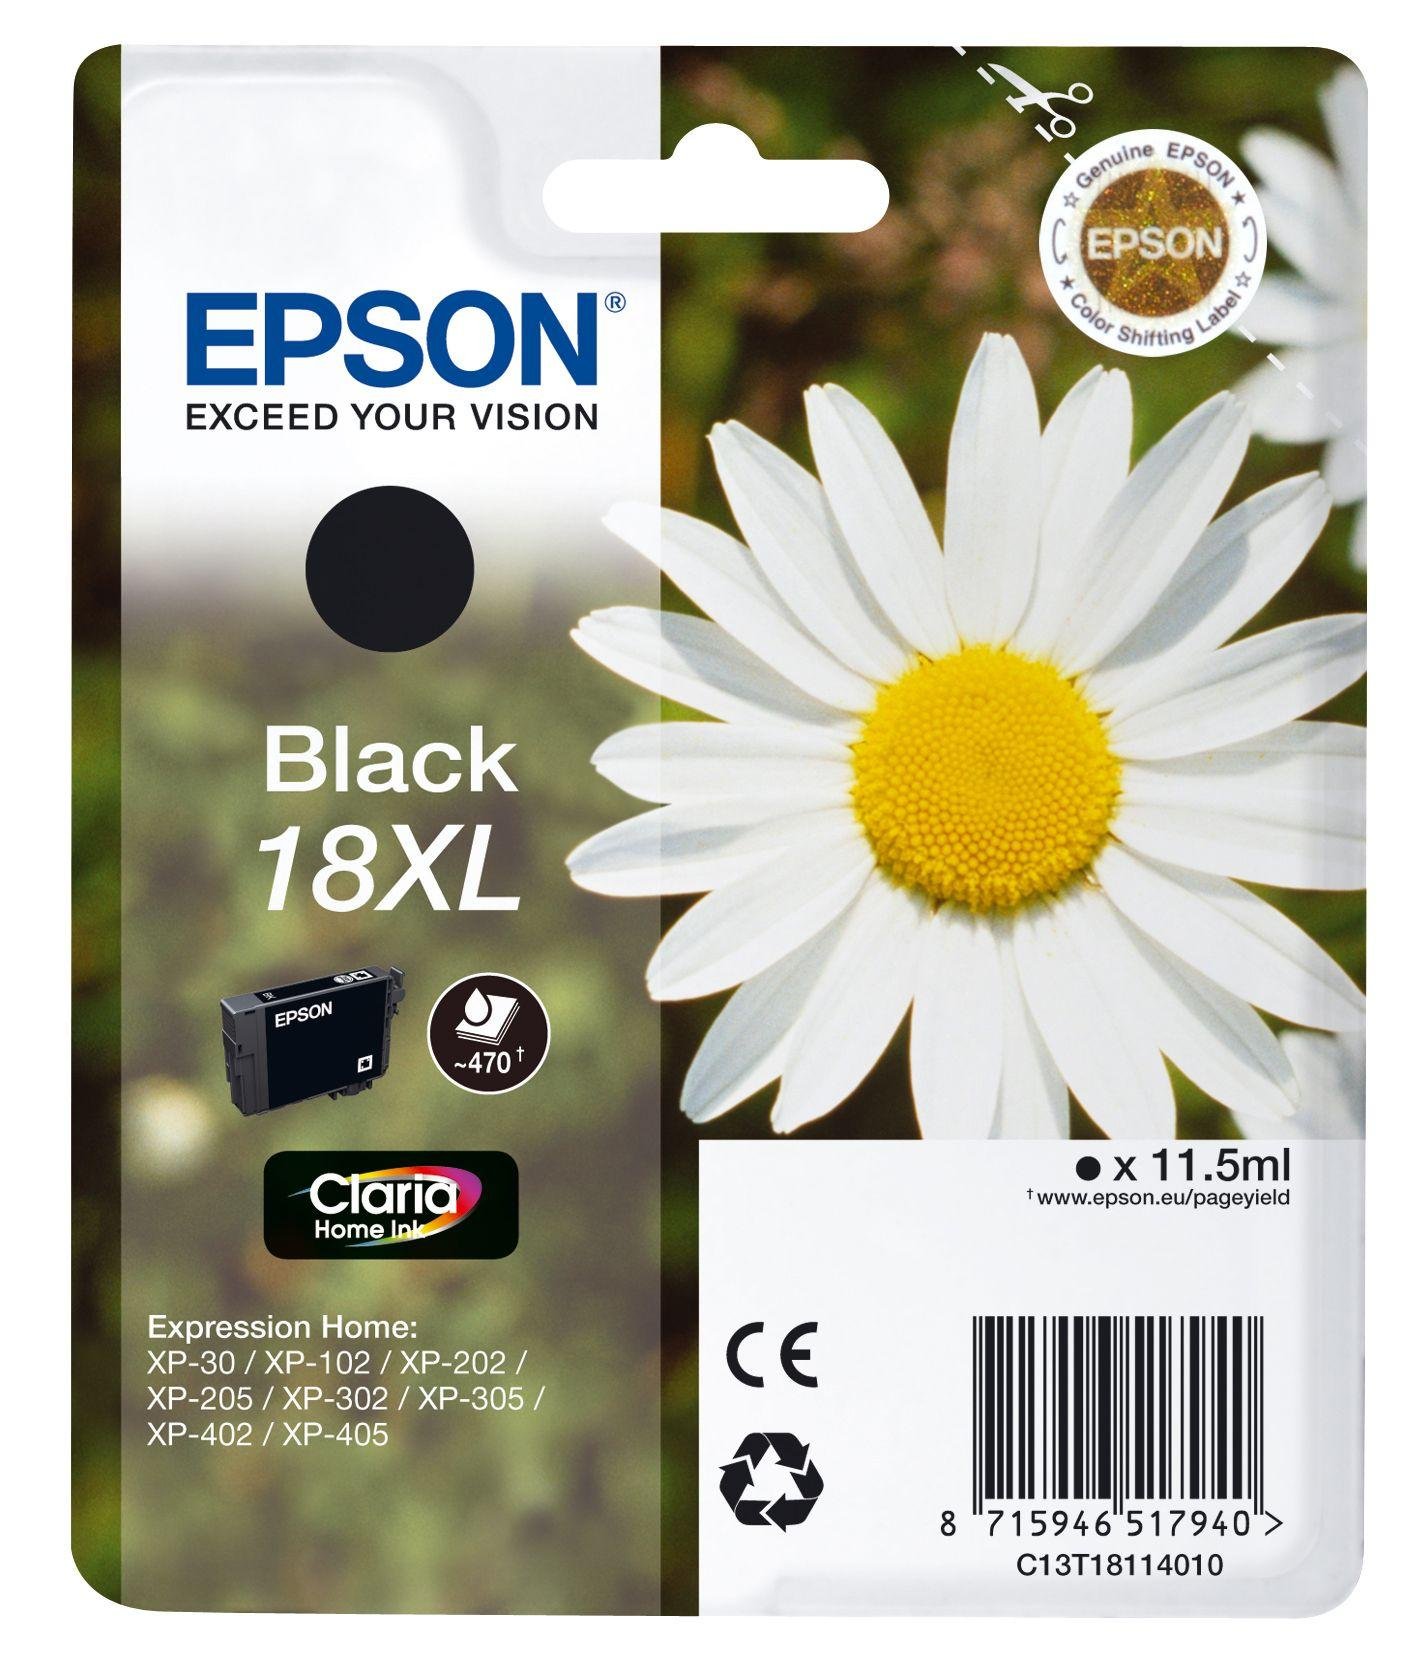 Epson Daisy 18XL Black Ink Cartridge review